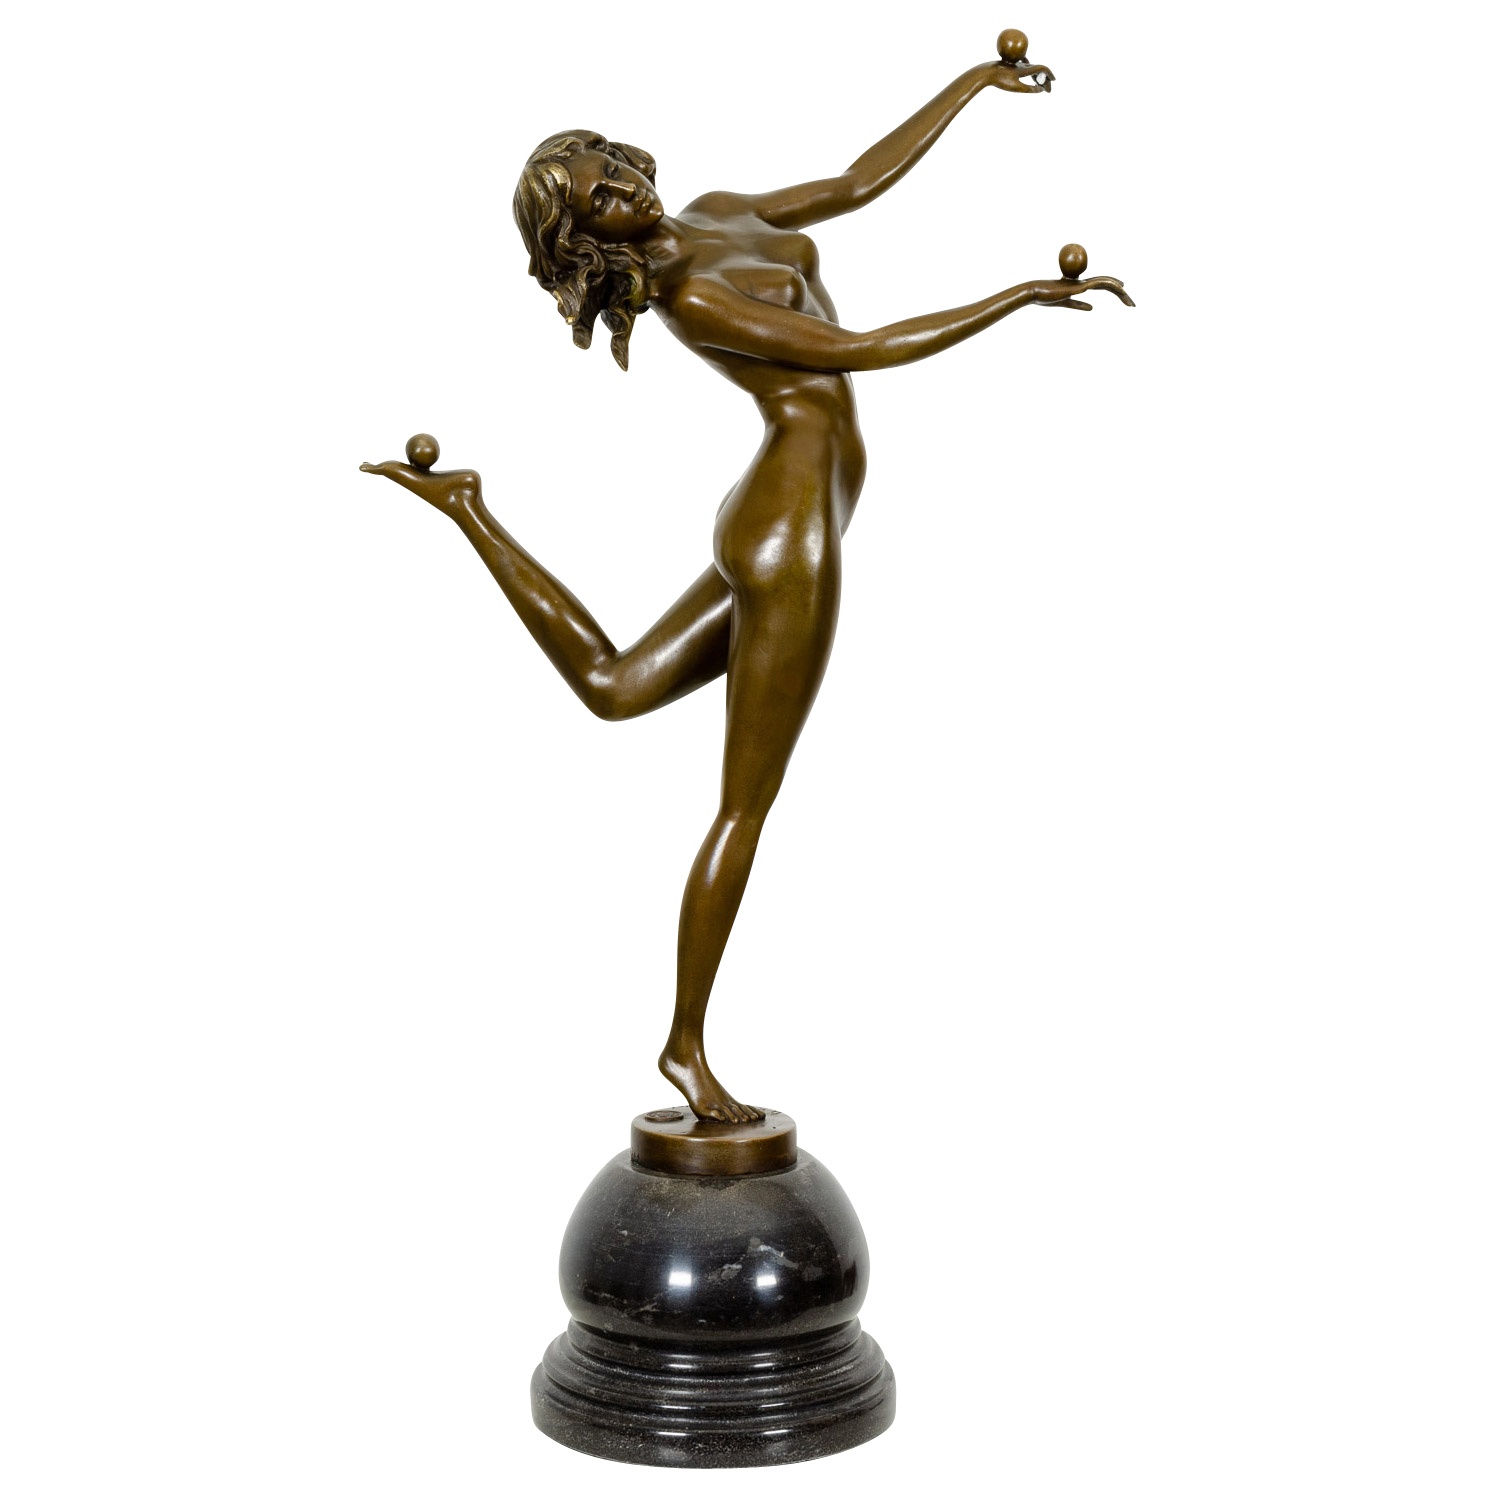 A bronze sculpture of the acrobat 54cm | eBay